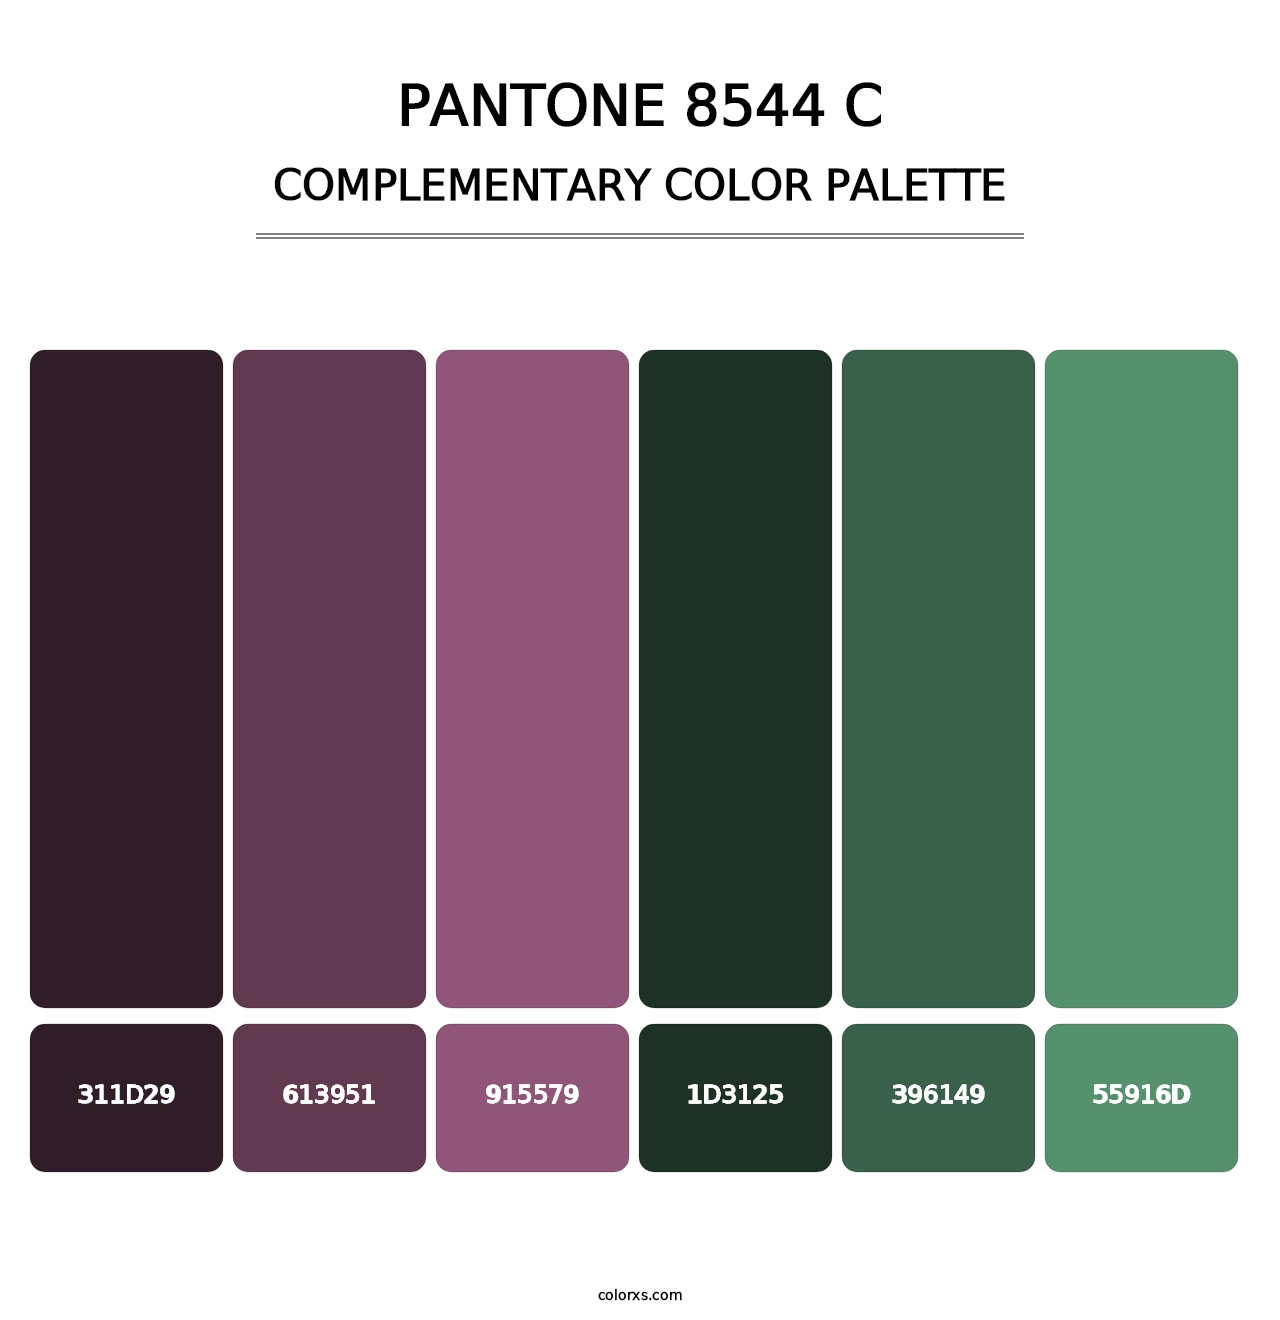 PANTONE 8544 C - Complementary Color Palette